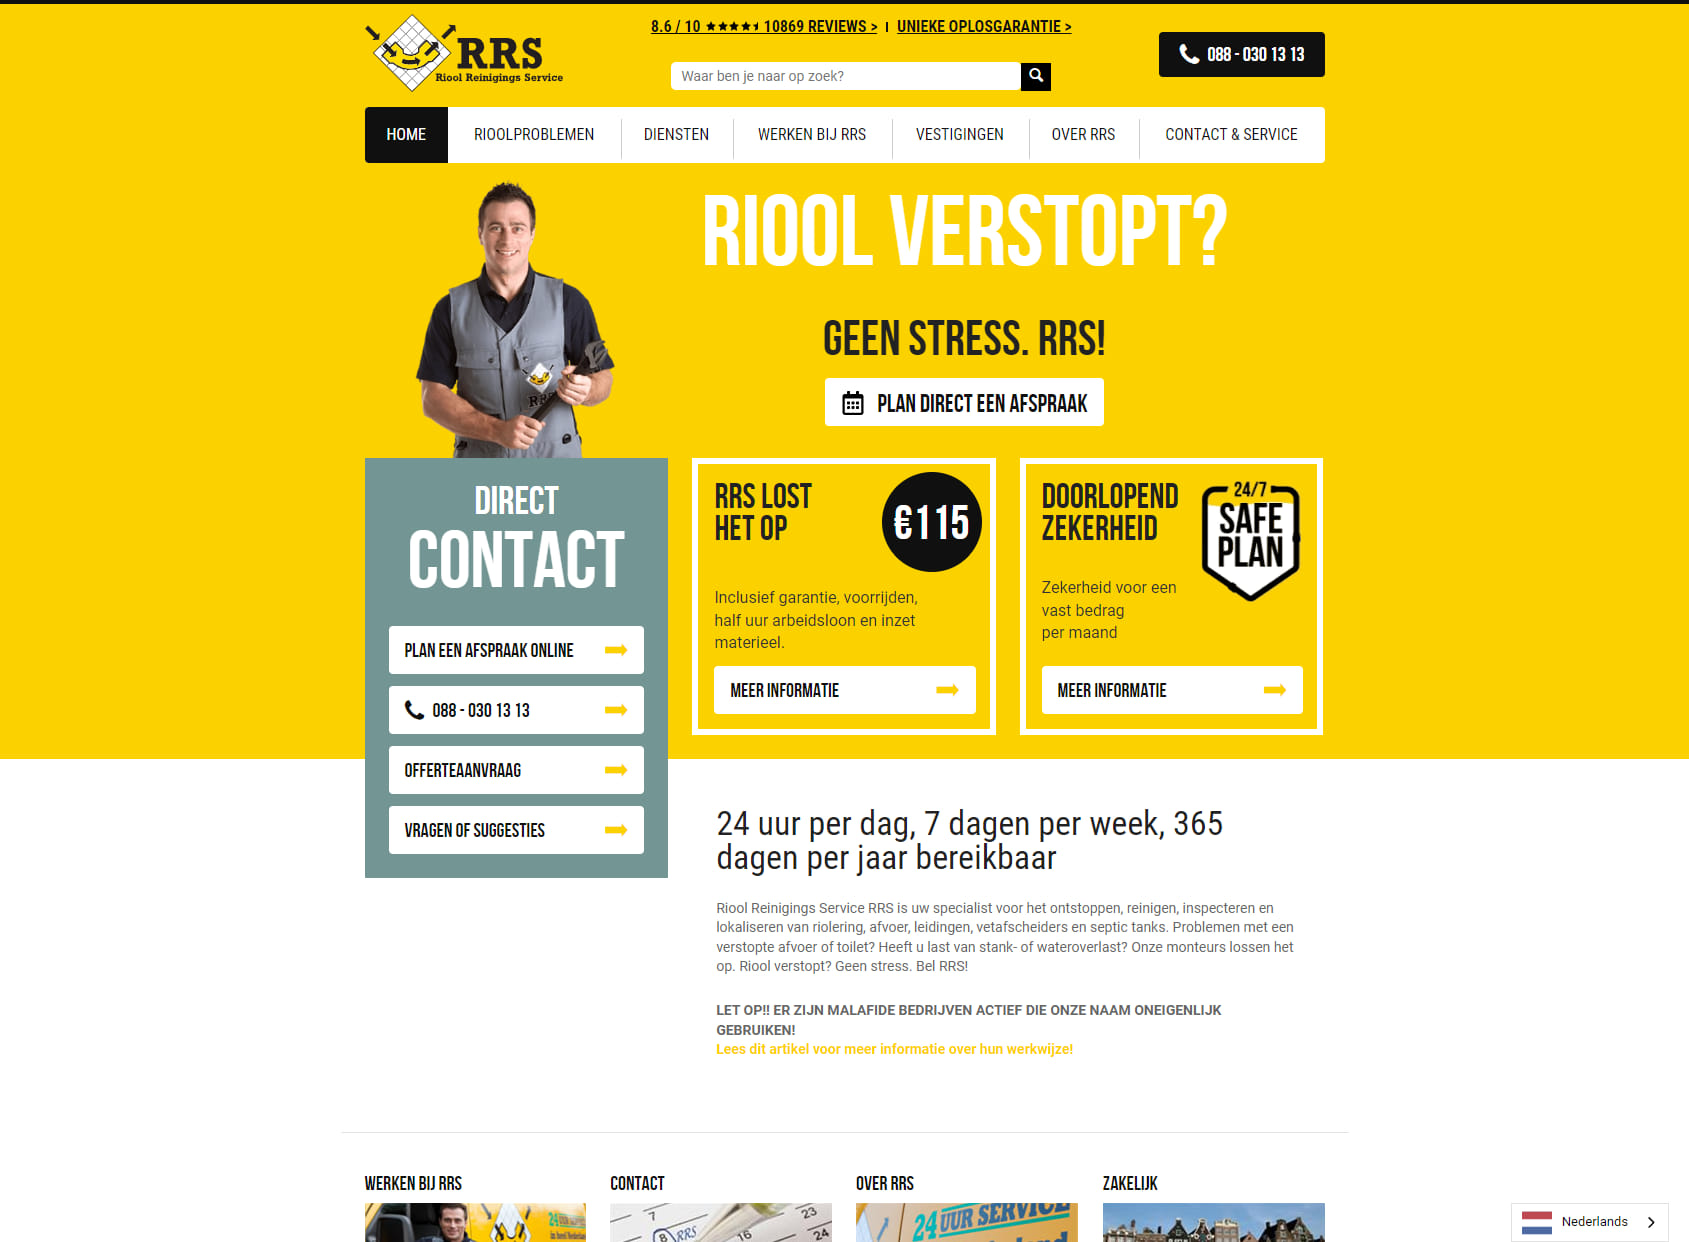 Riool Reinigings Service RRS, Rotterdam